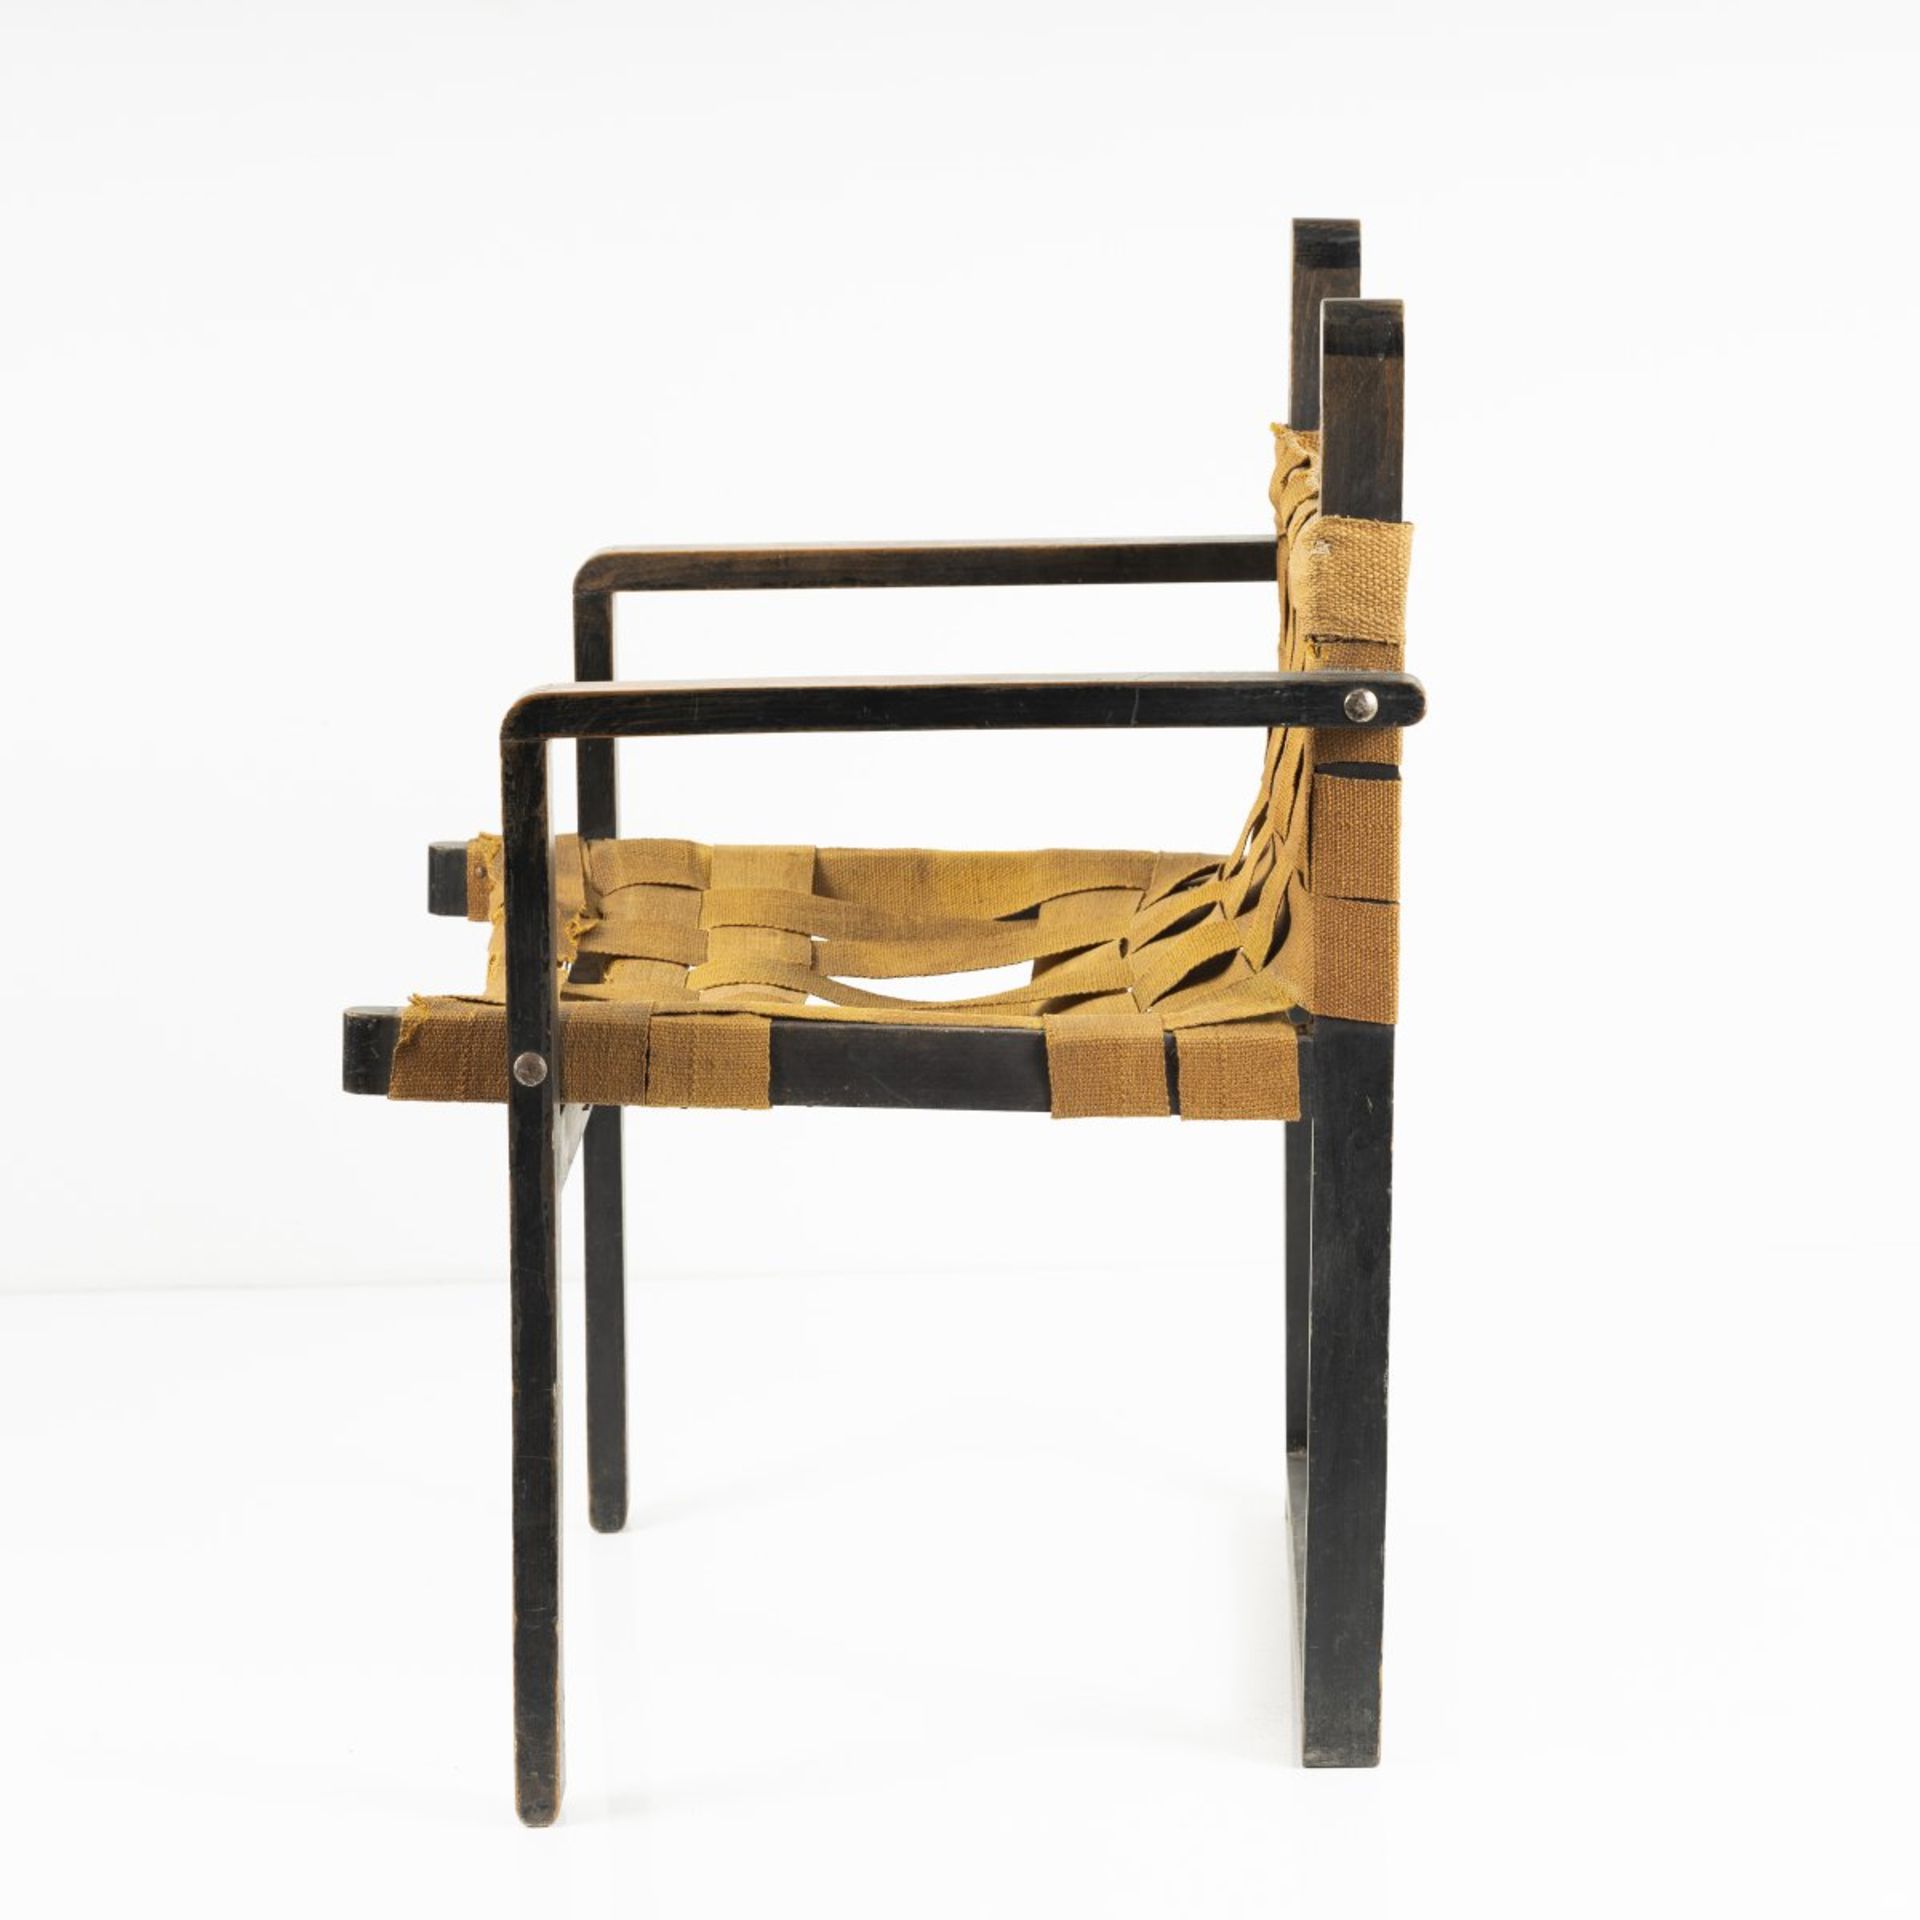 Bauhaus (surroundings of), Crate chair, c. 1925Crate chair, c. 1925H. 81 x 63.2 x 60 cm; wooden - Bild 7 aus 18